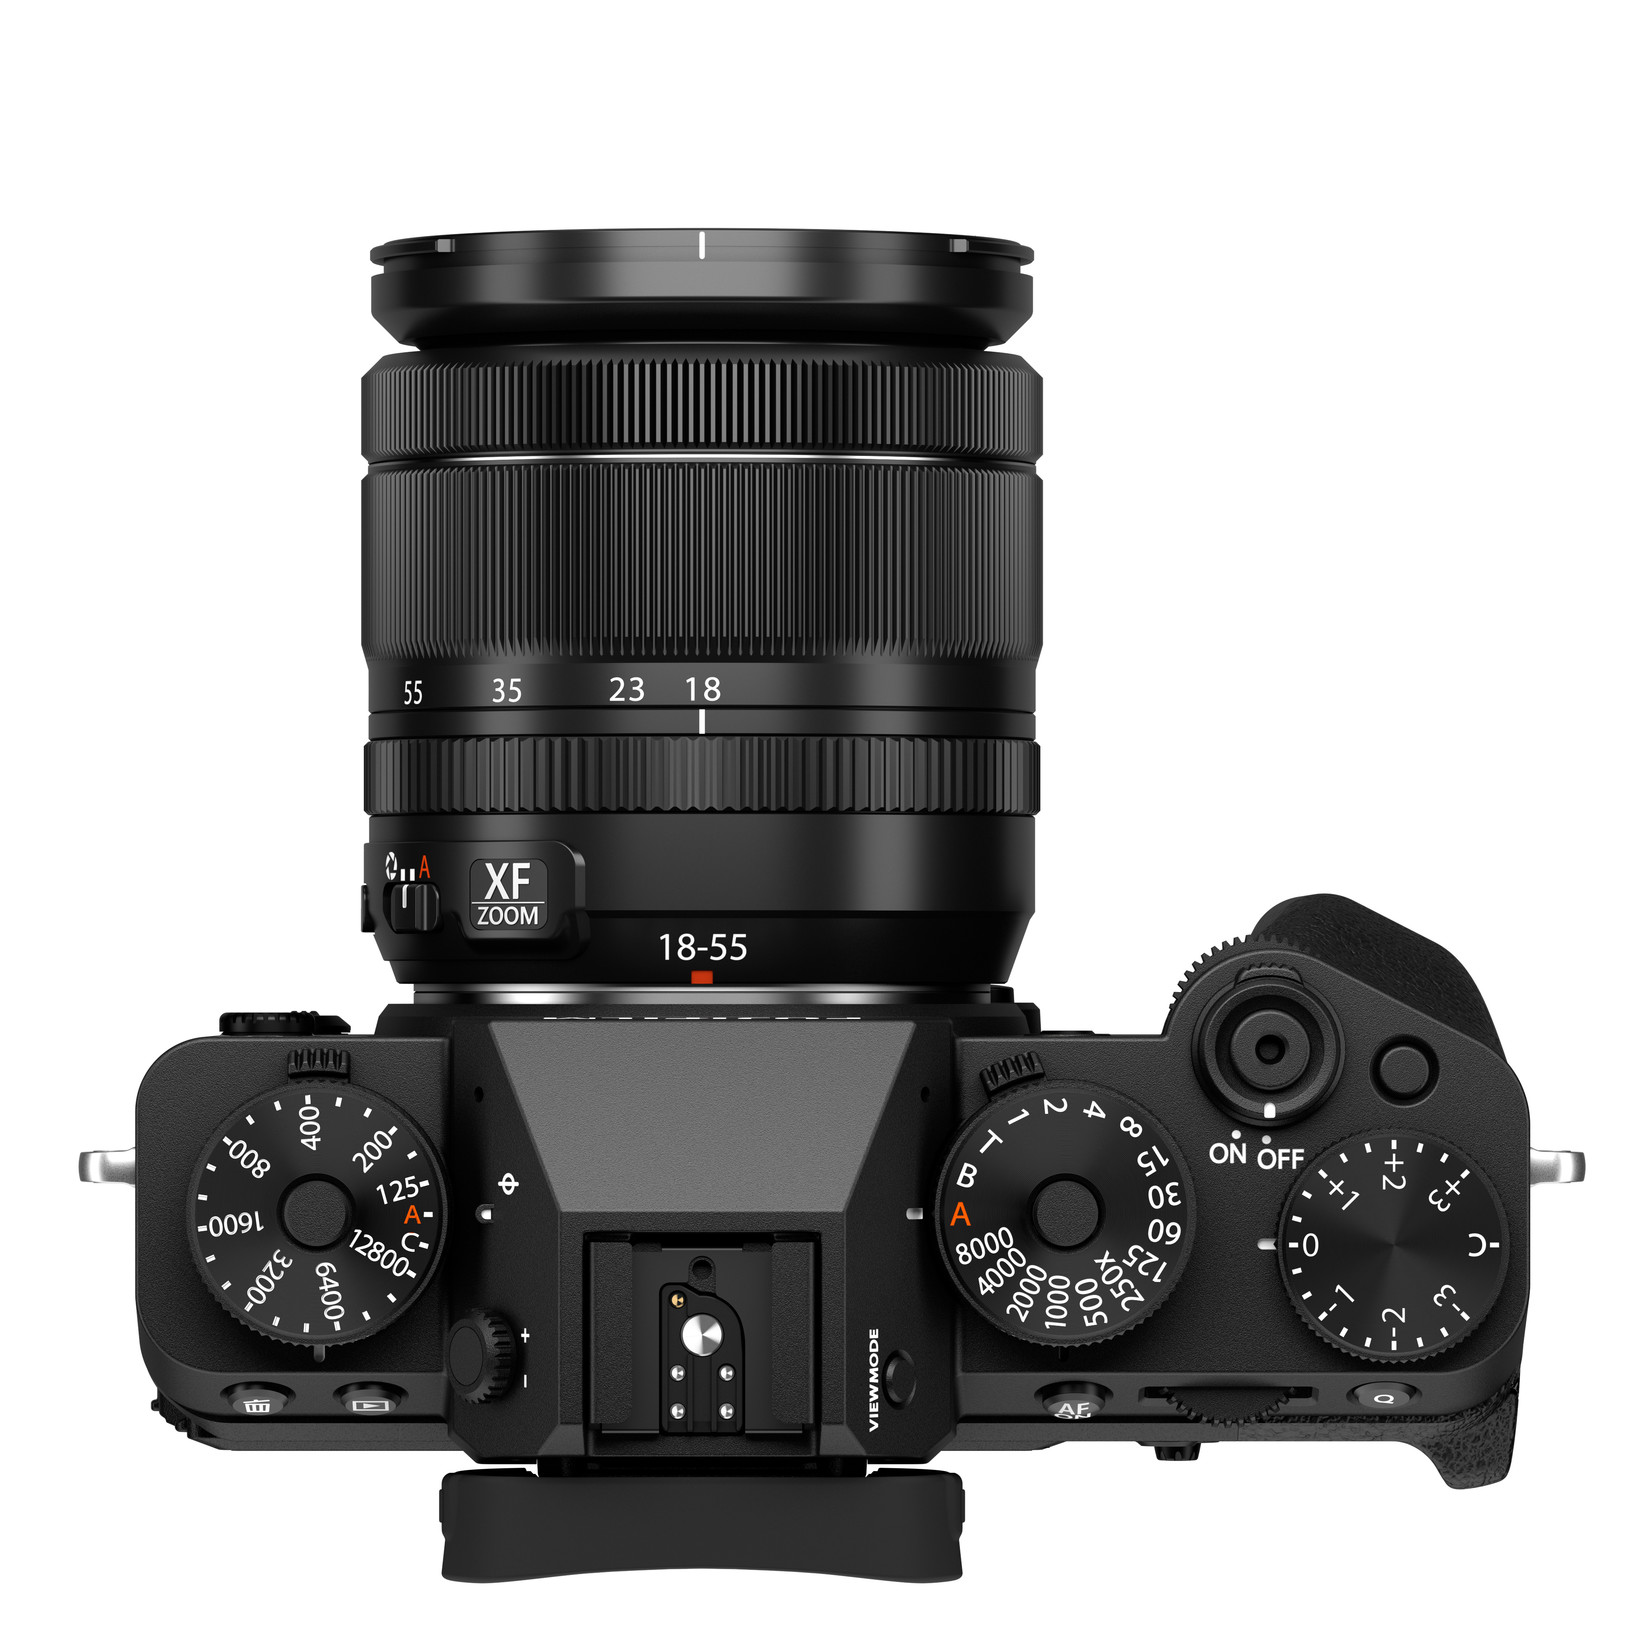 Fujifilm X-T5 Body, Black with XF18-55mmF2.8-4 R LM OIS Lens Kit